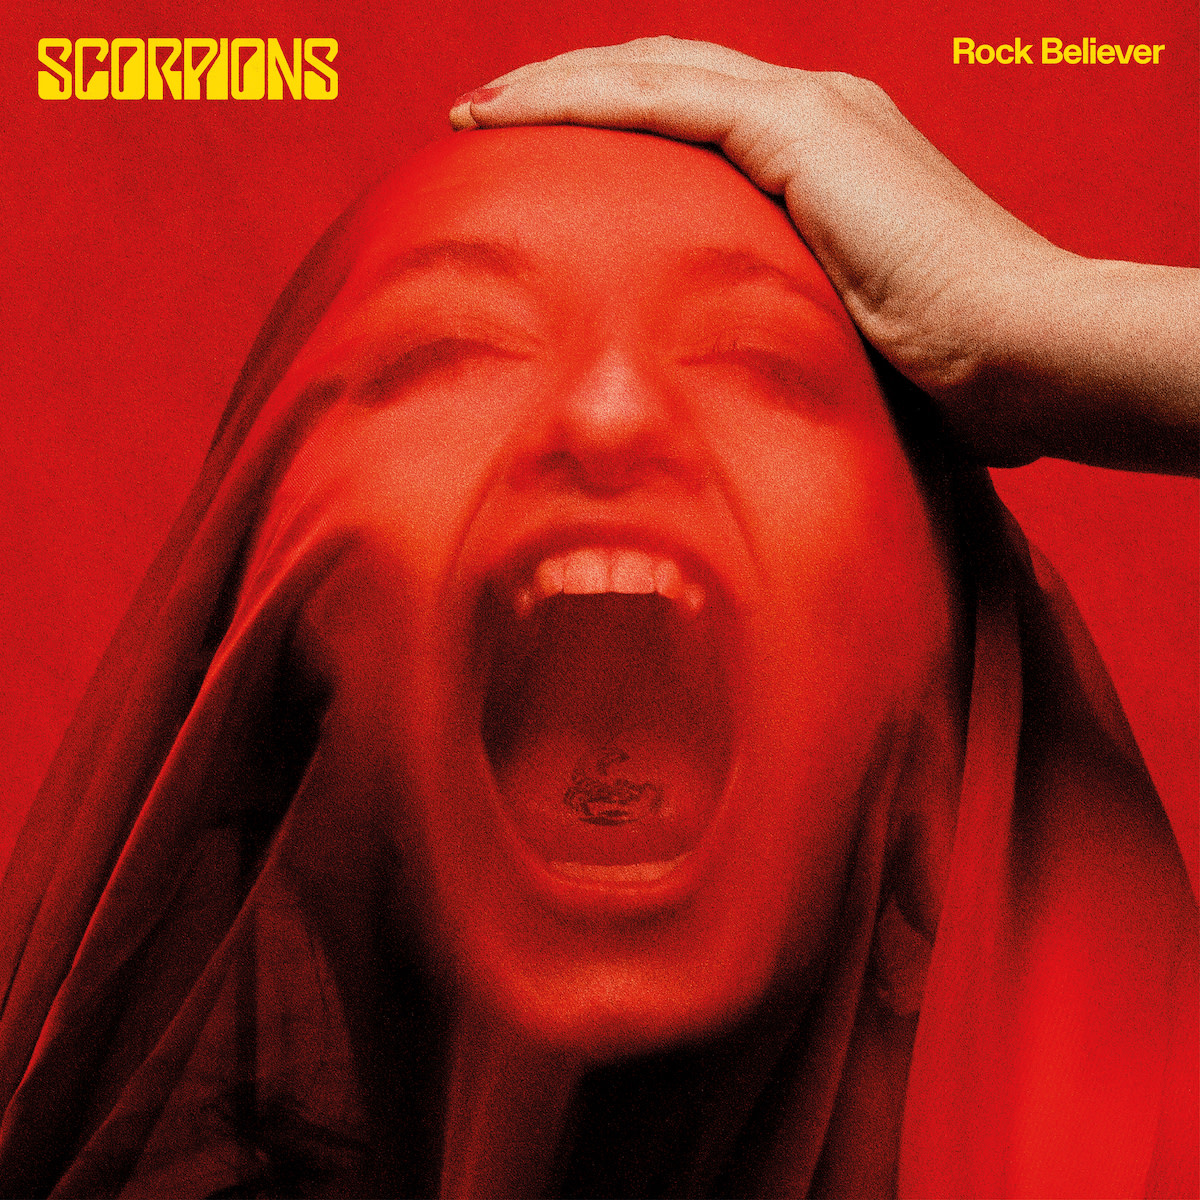 Scorpions_RockBeliever Album_Cover copy